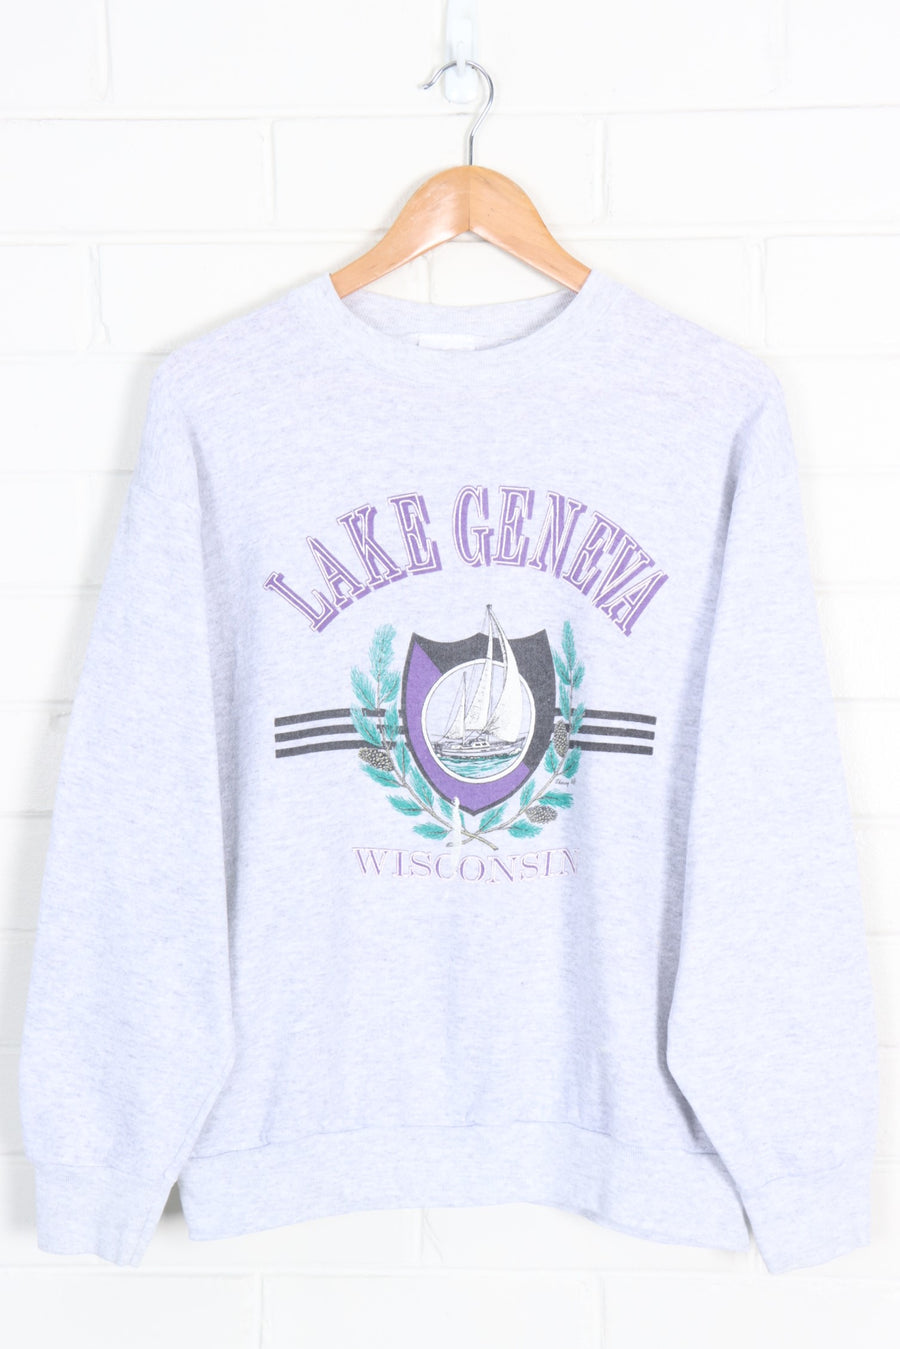 Lake Geneva Wisconsin Crest Sail Boat Sweatshirt USA Made (L-XL)